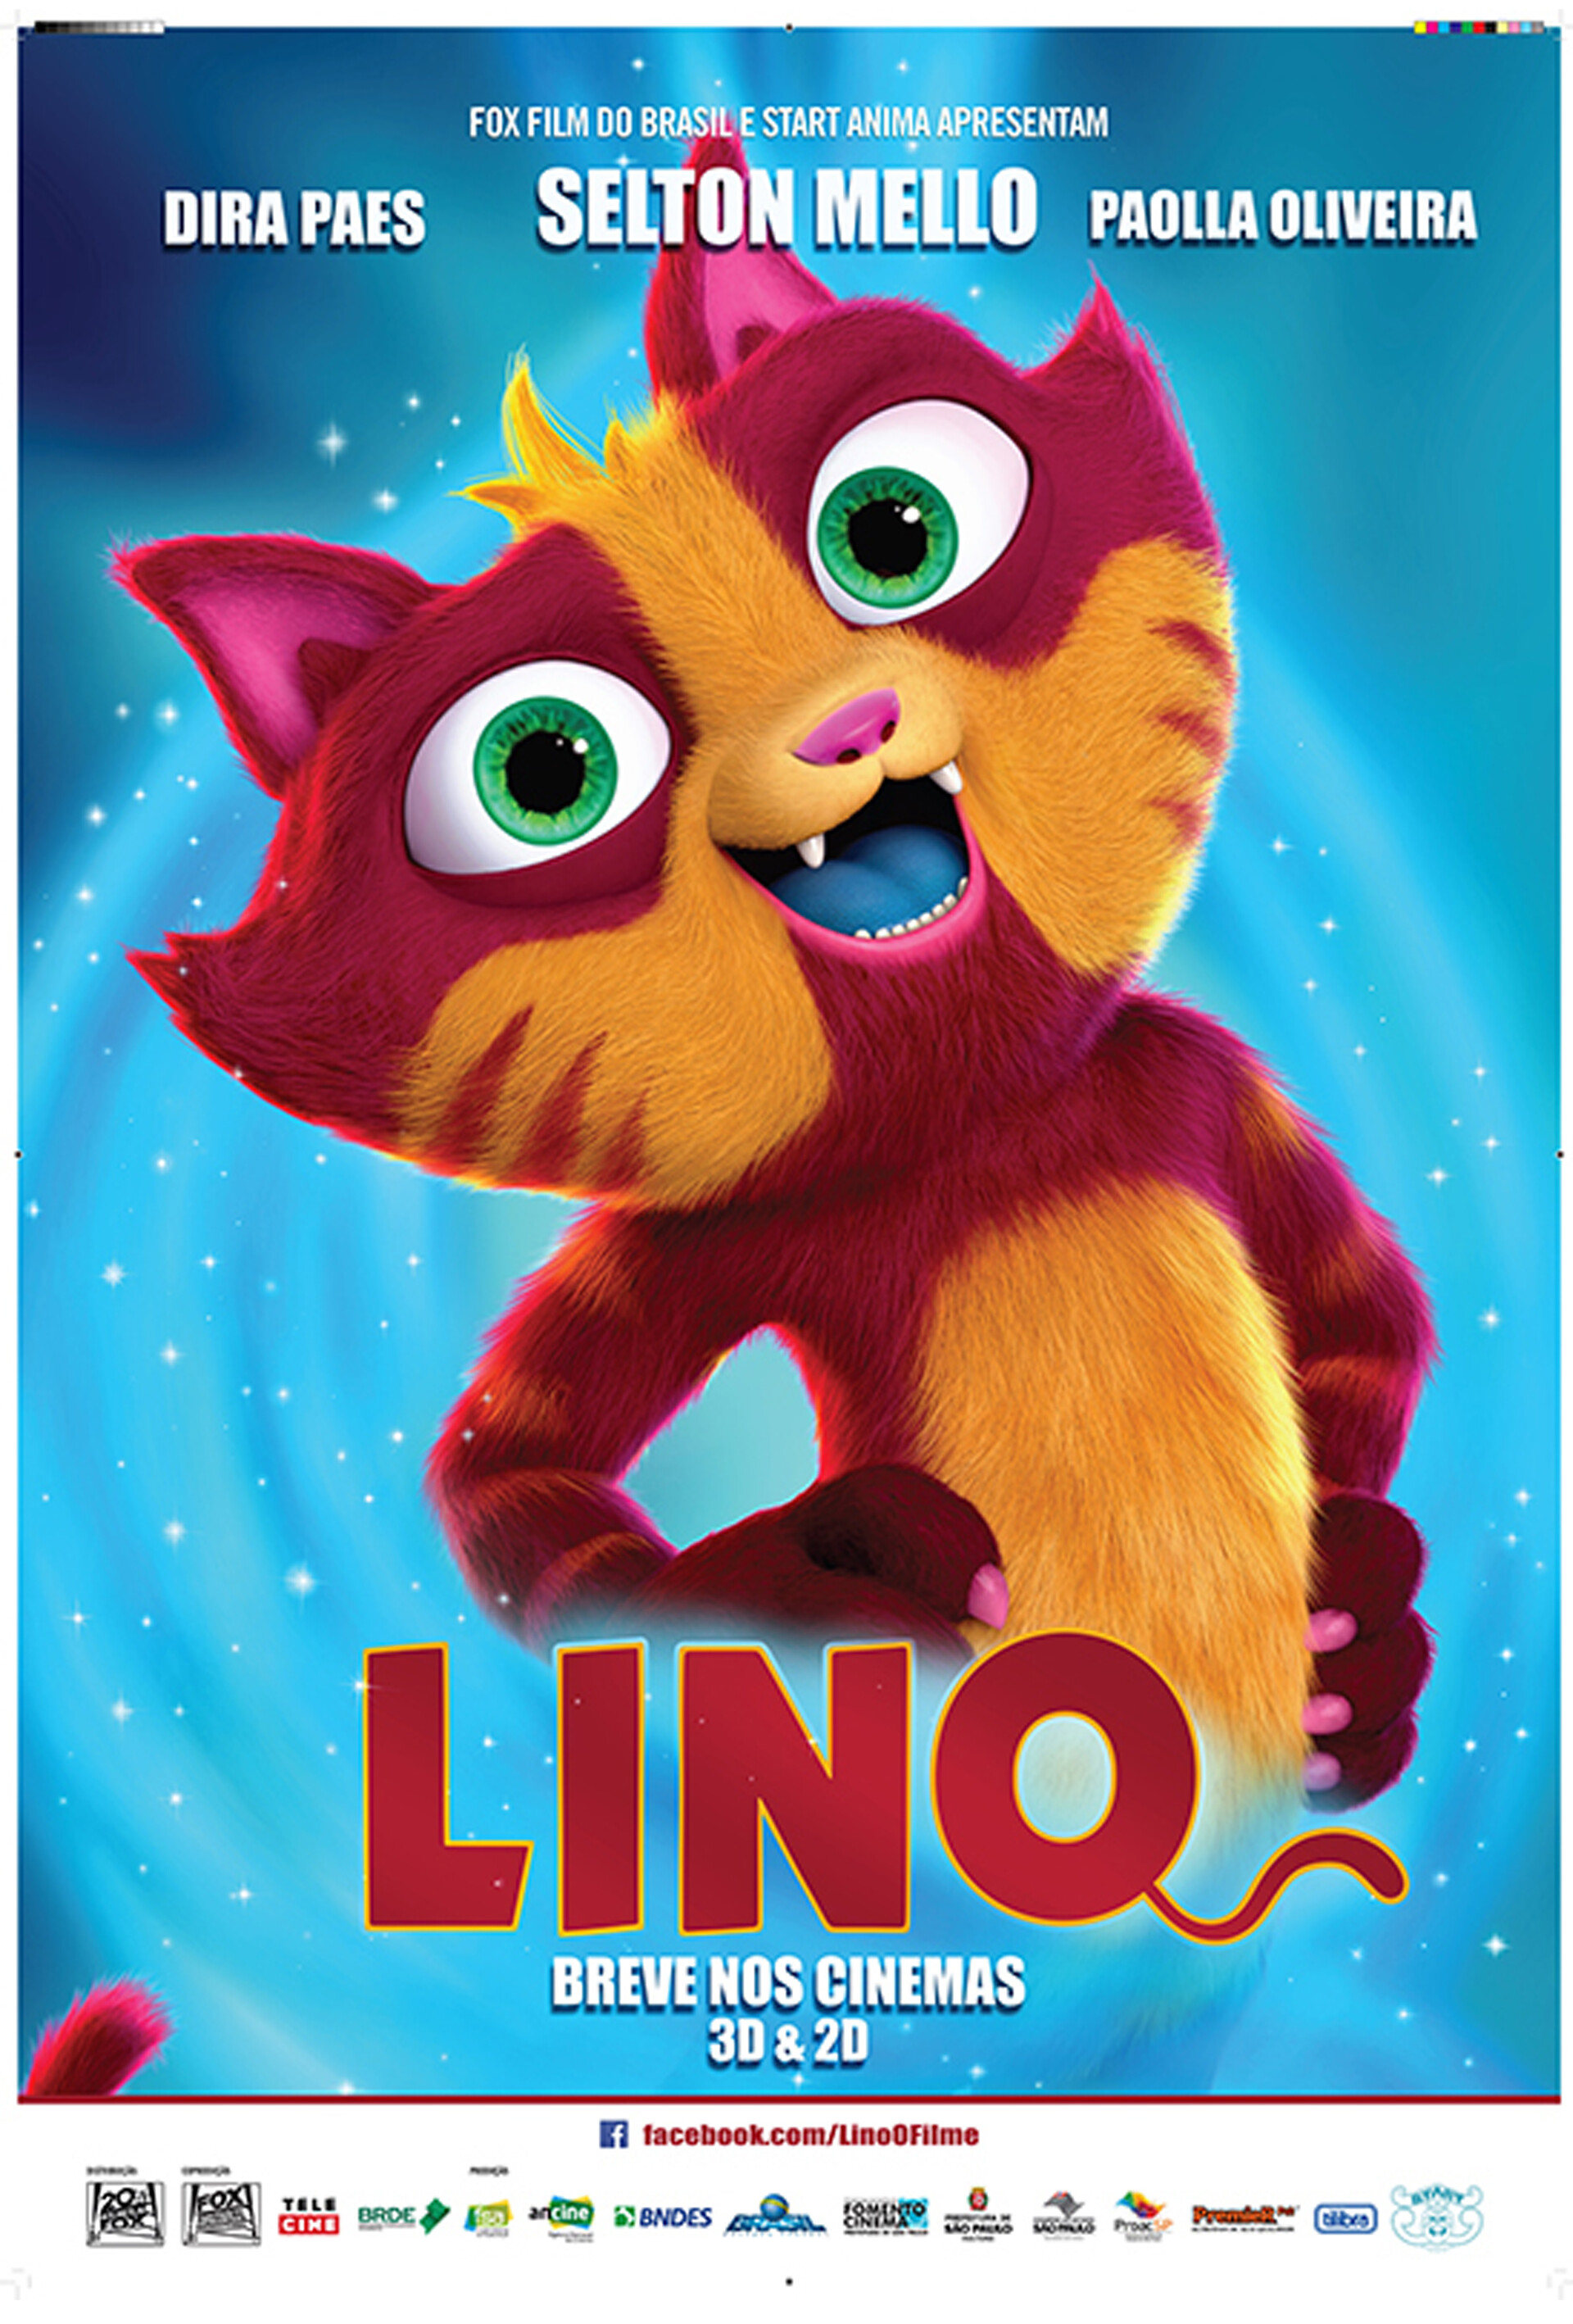 Alex Liki - Lino character - Lino Movie